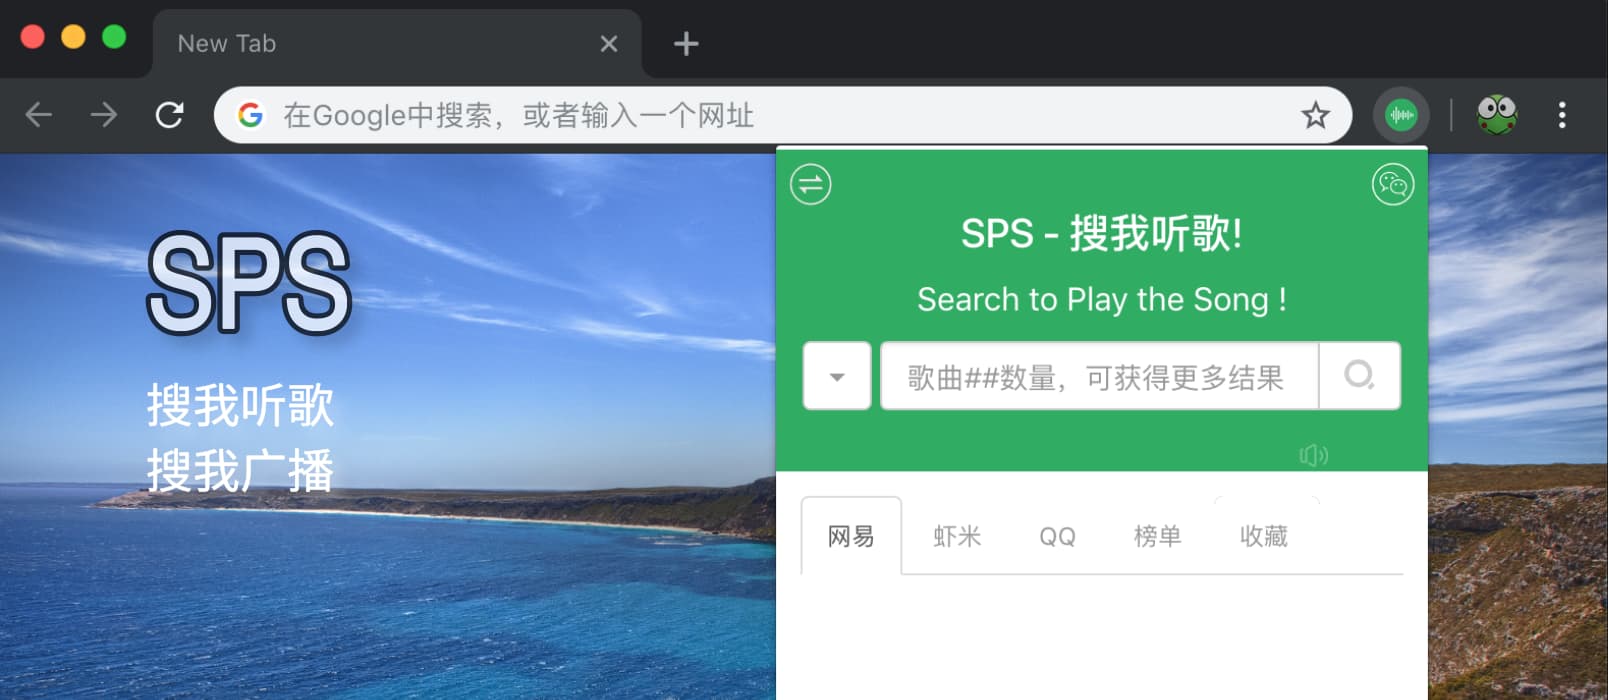 SPS - 搜我听歌，搜我电台，Chrome 上的极简听歌扩展 1